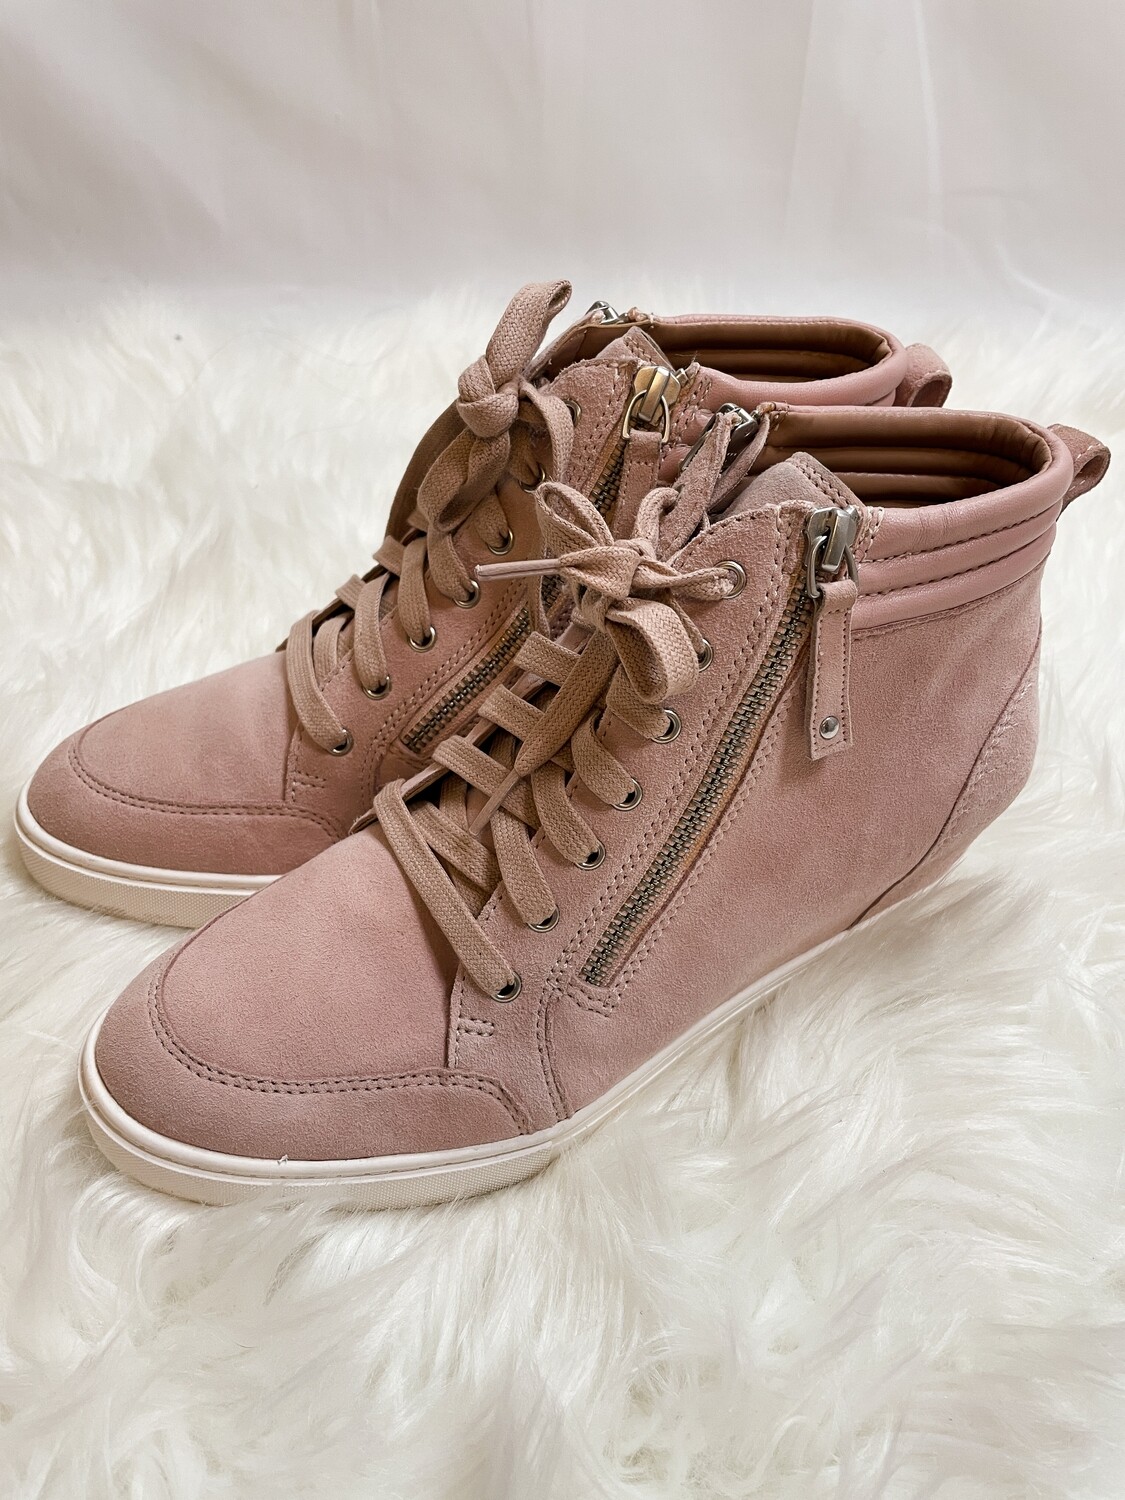 Linea Paola Blush Niya Wedge Sneakers - Size 8